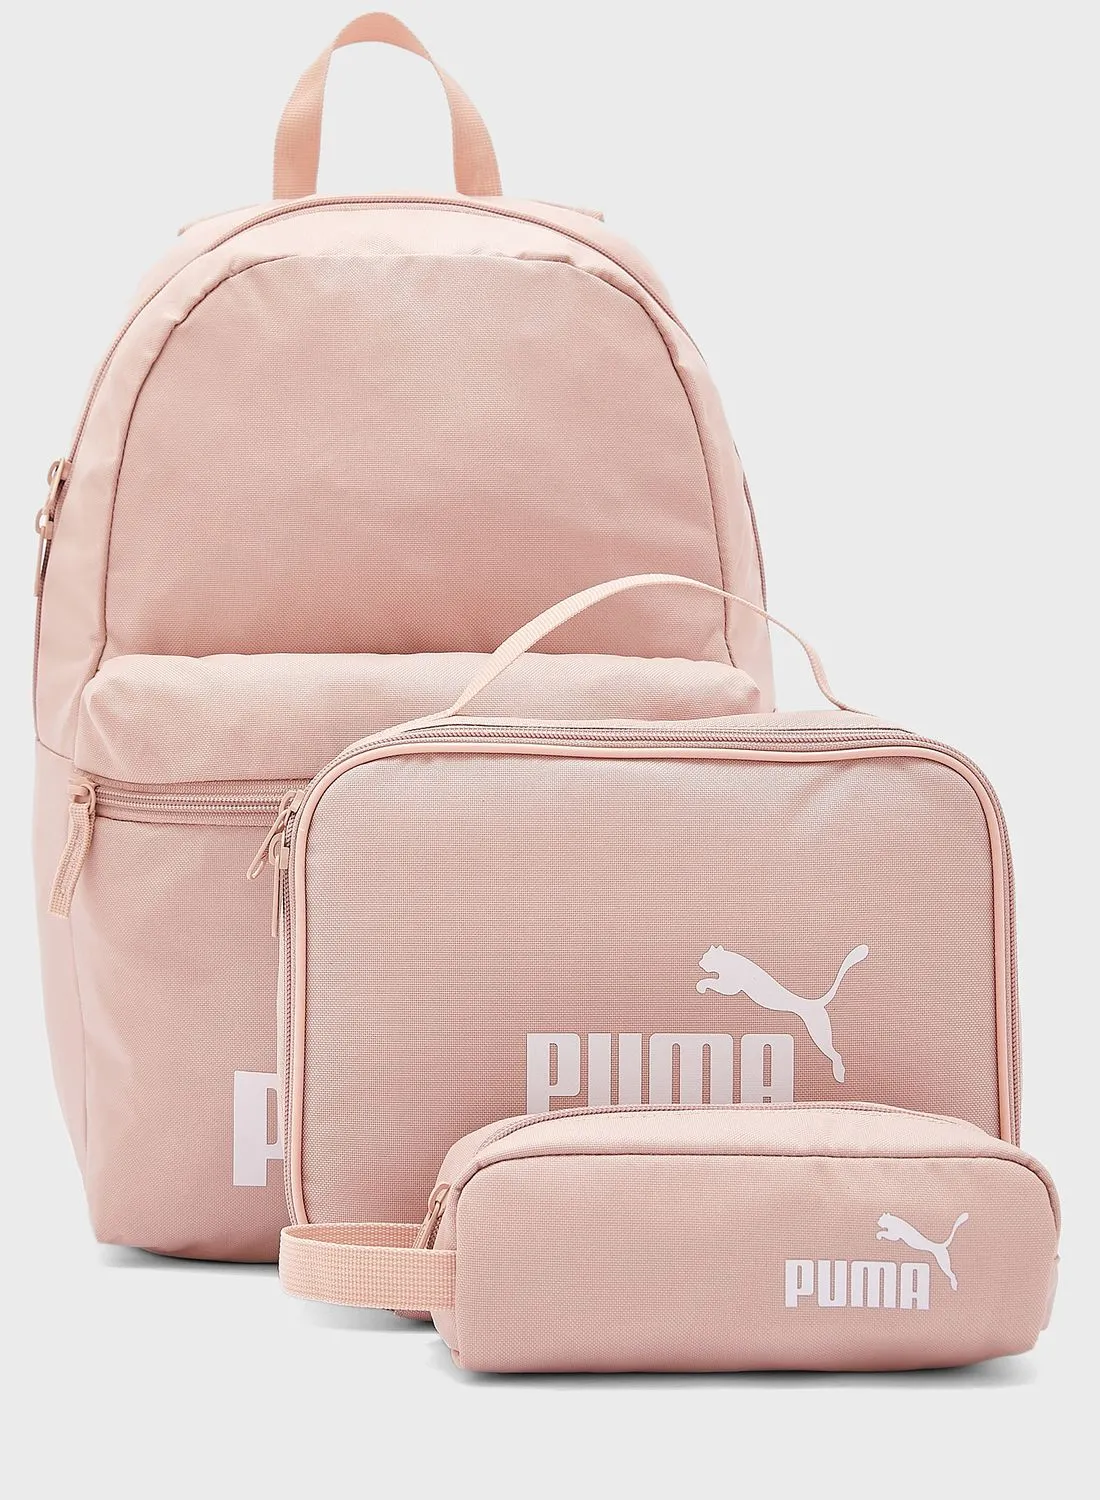 PUMA Lunchbag and Backpack Set